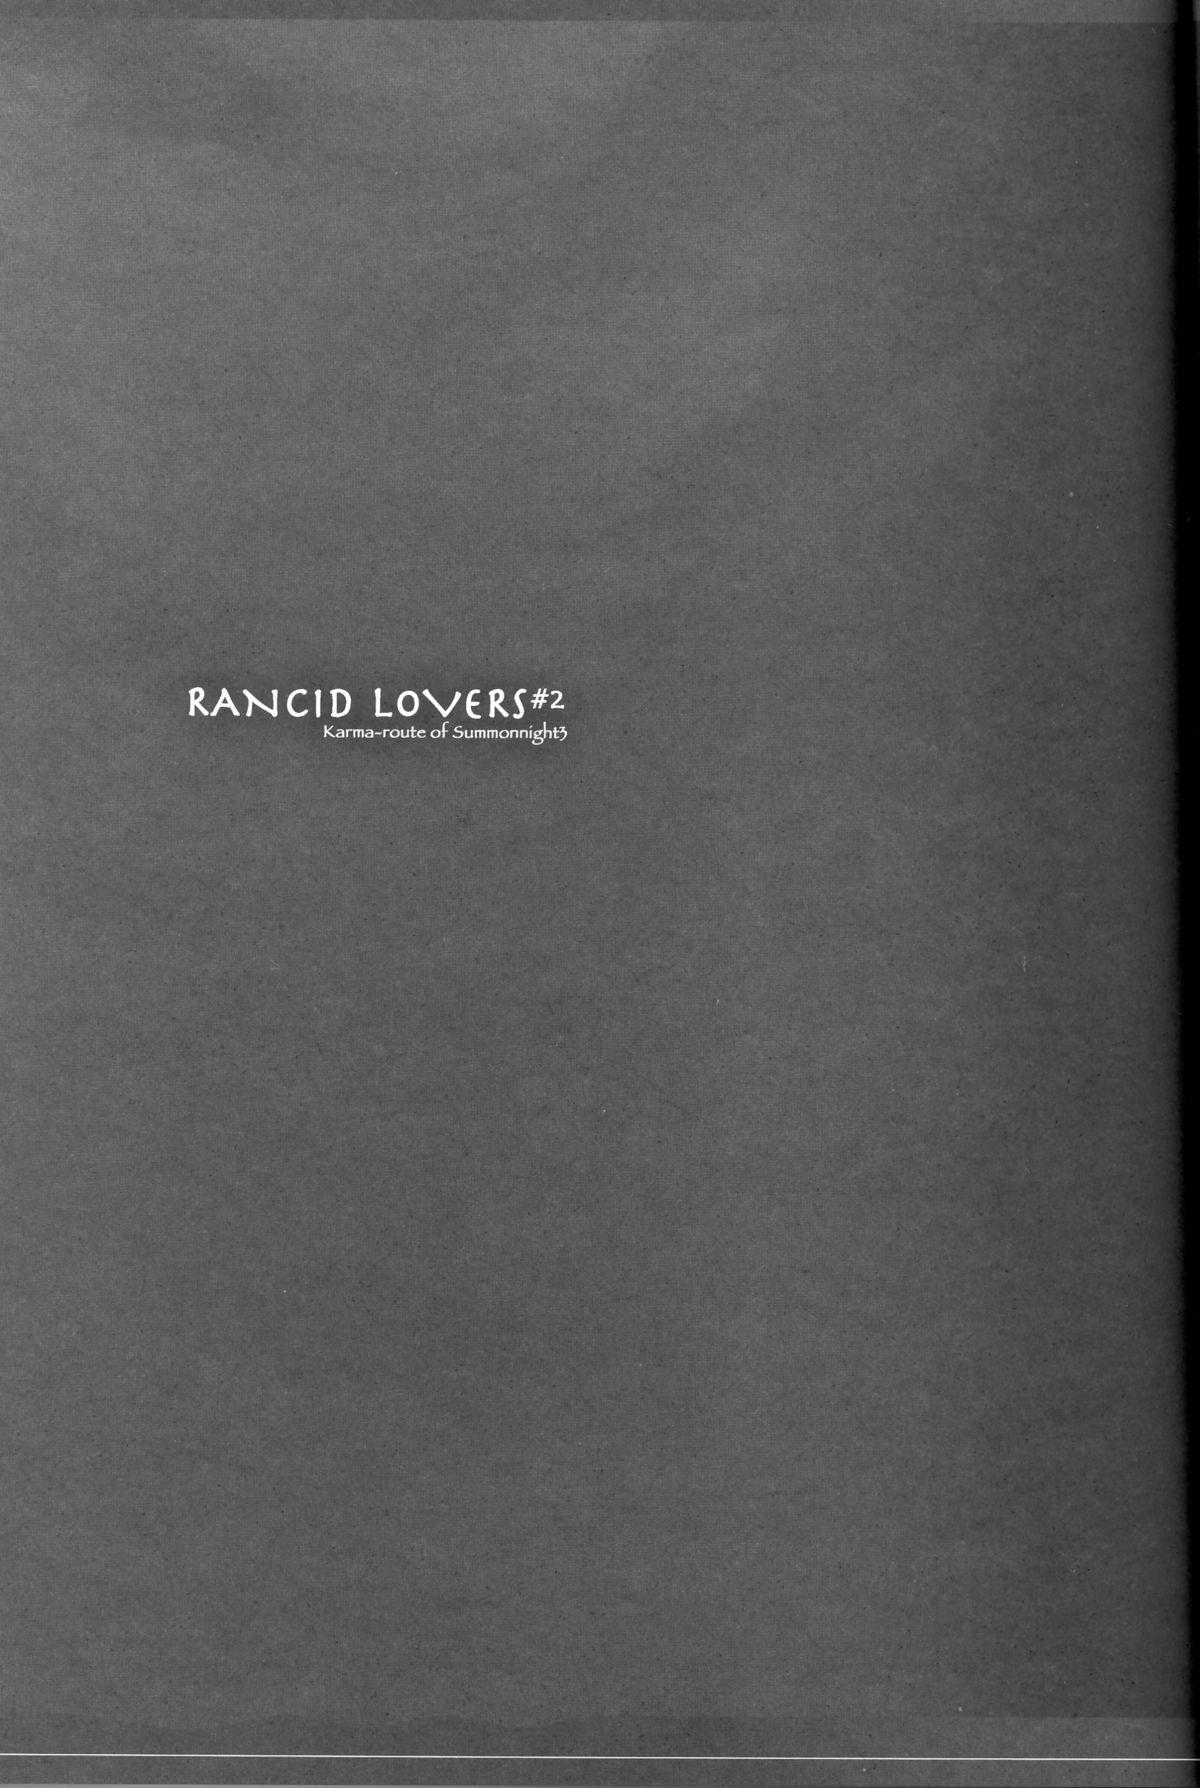 Rancid Lovers #2 5